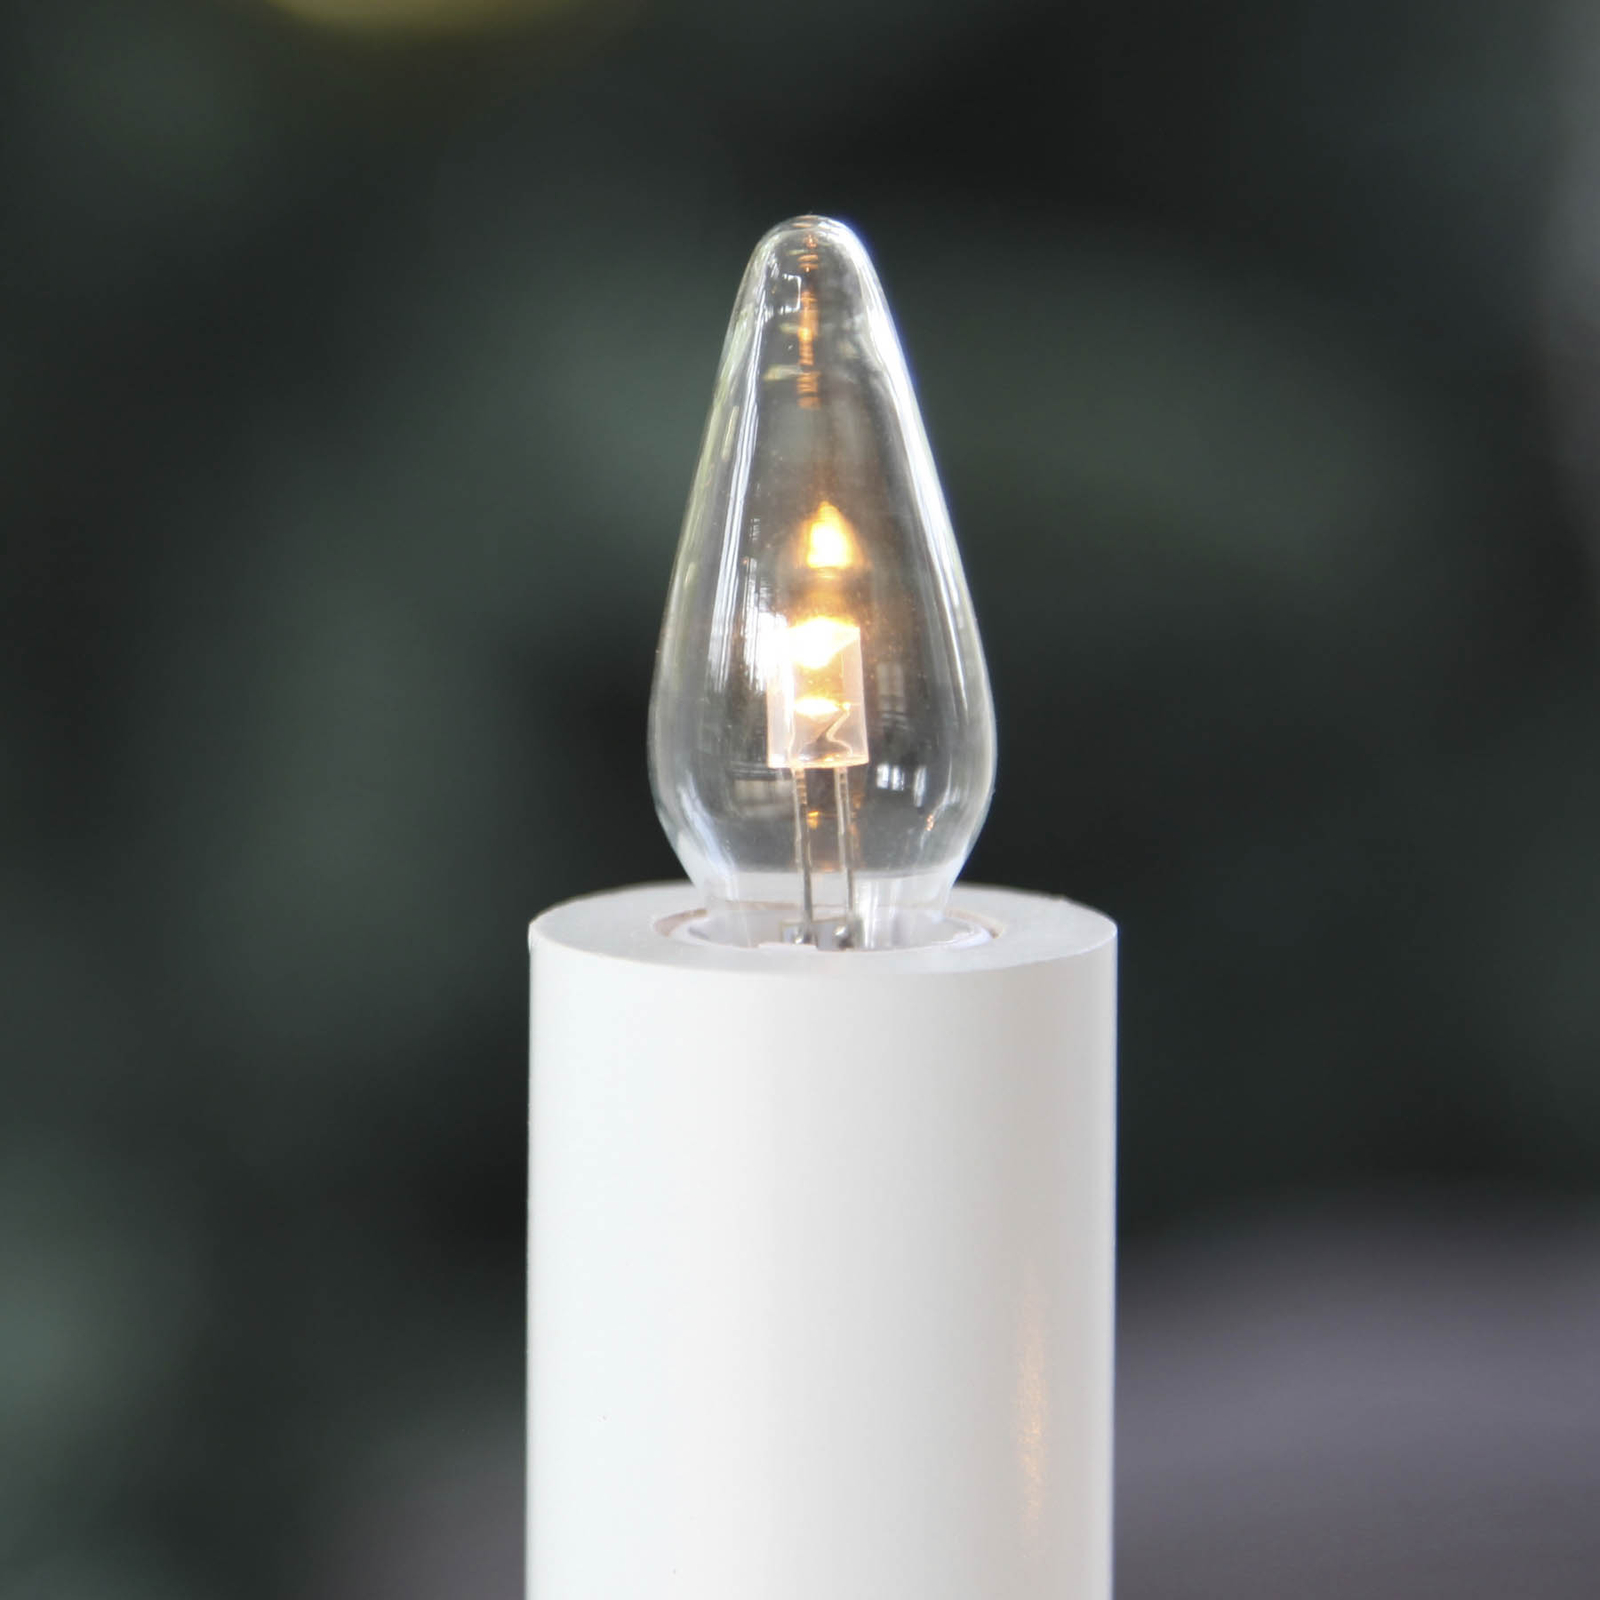 E10 0.2 W 10-55 V spare LED bulbs, set of 3, clear